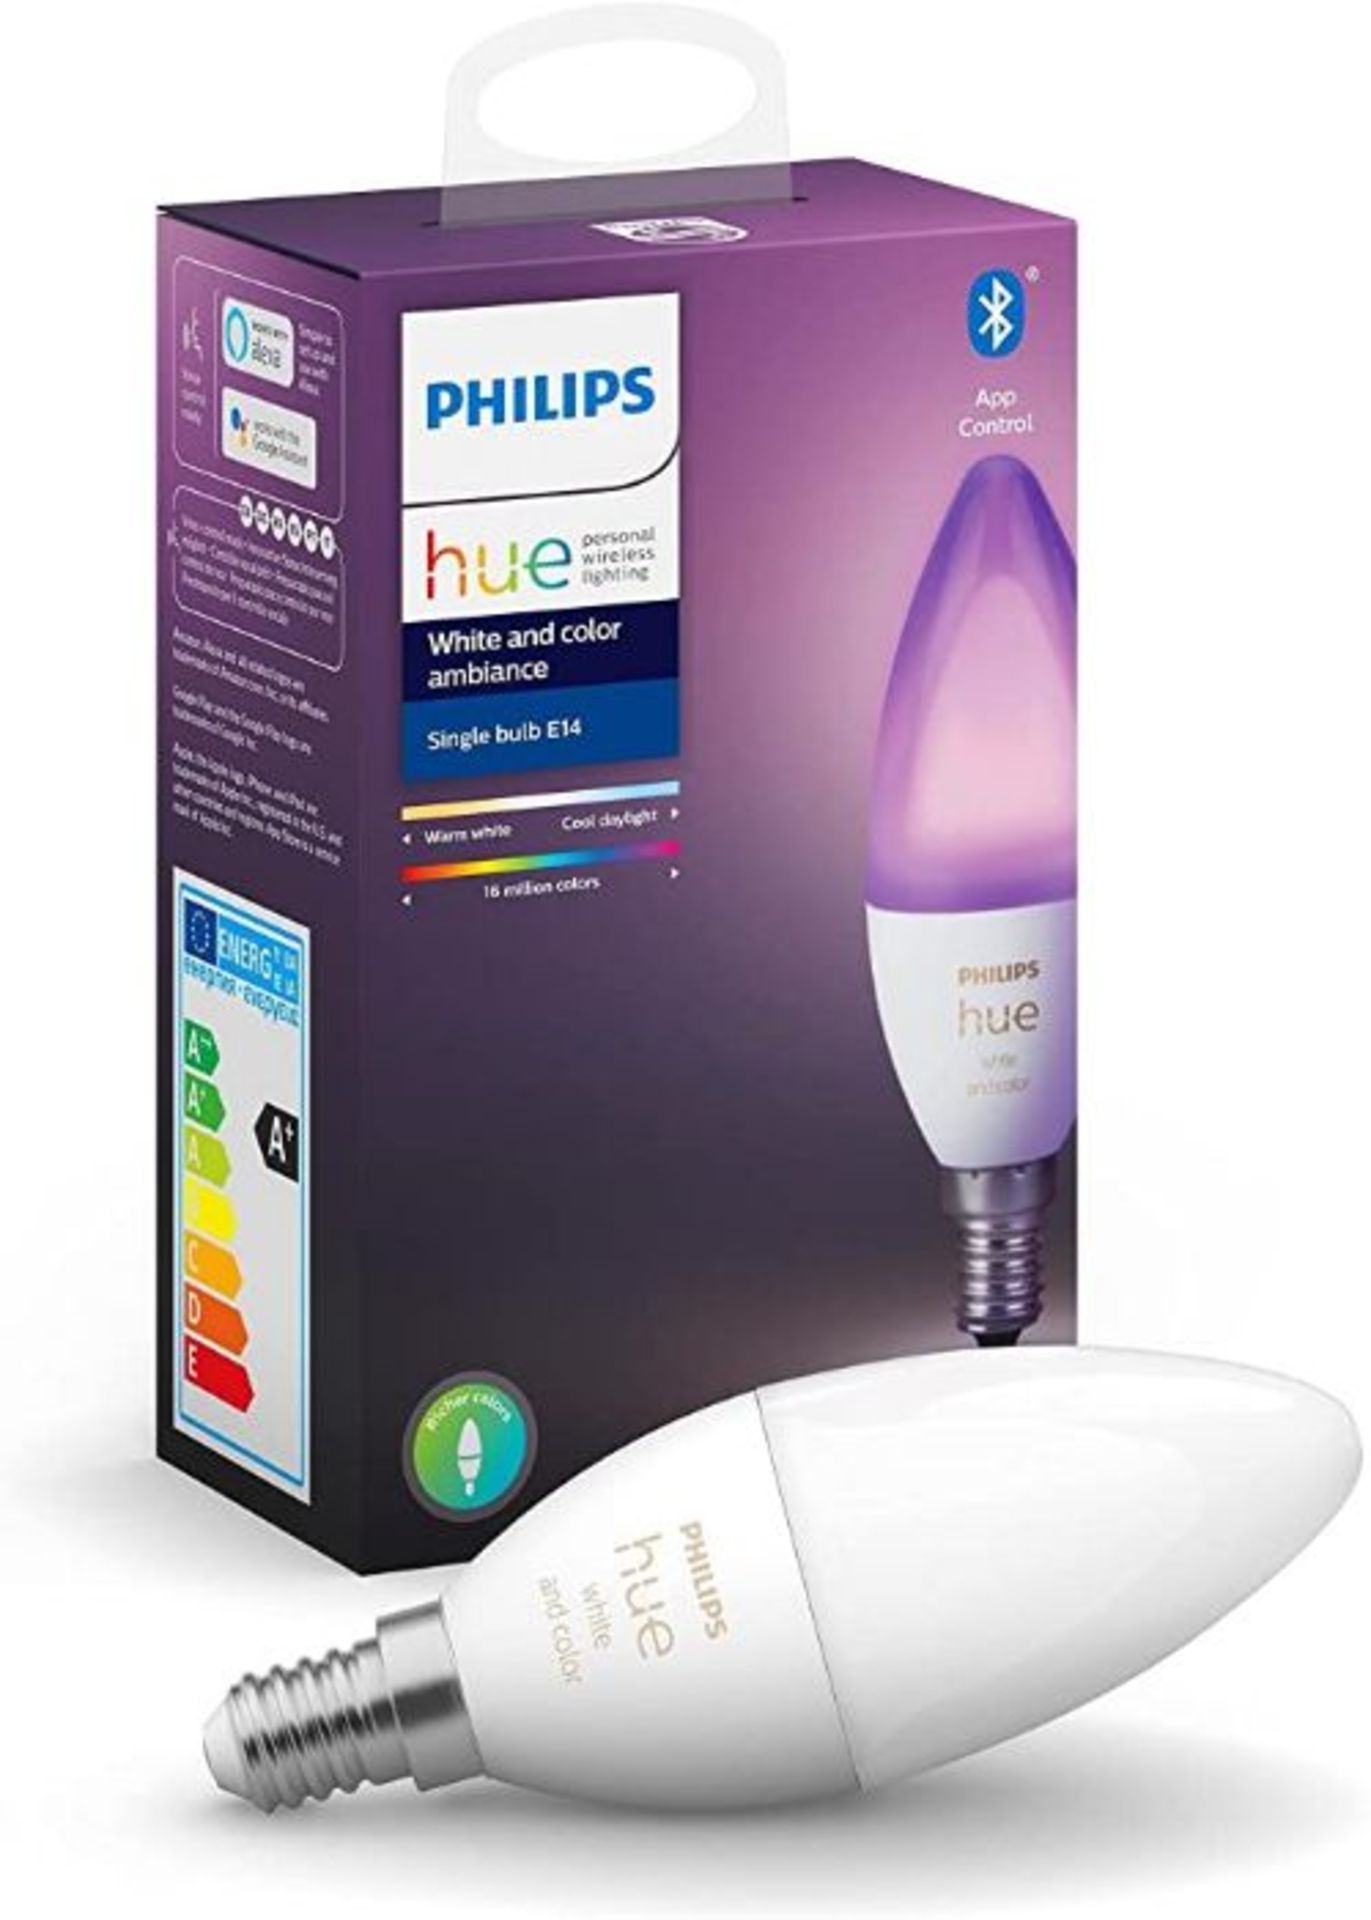 Philips Hue White and Colour ambience Single Bulb E14, Smart Bulb, White, Bluetooth/Zigbee, LED,